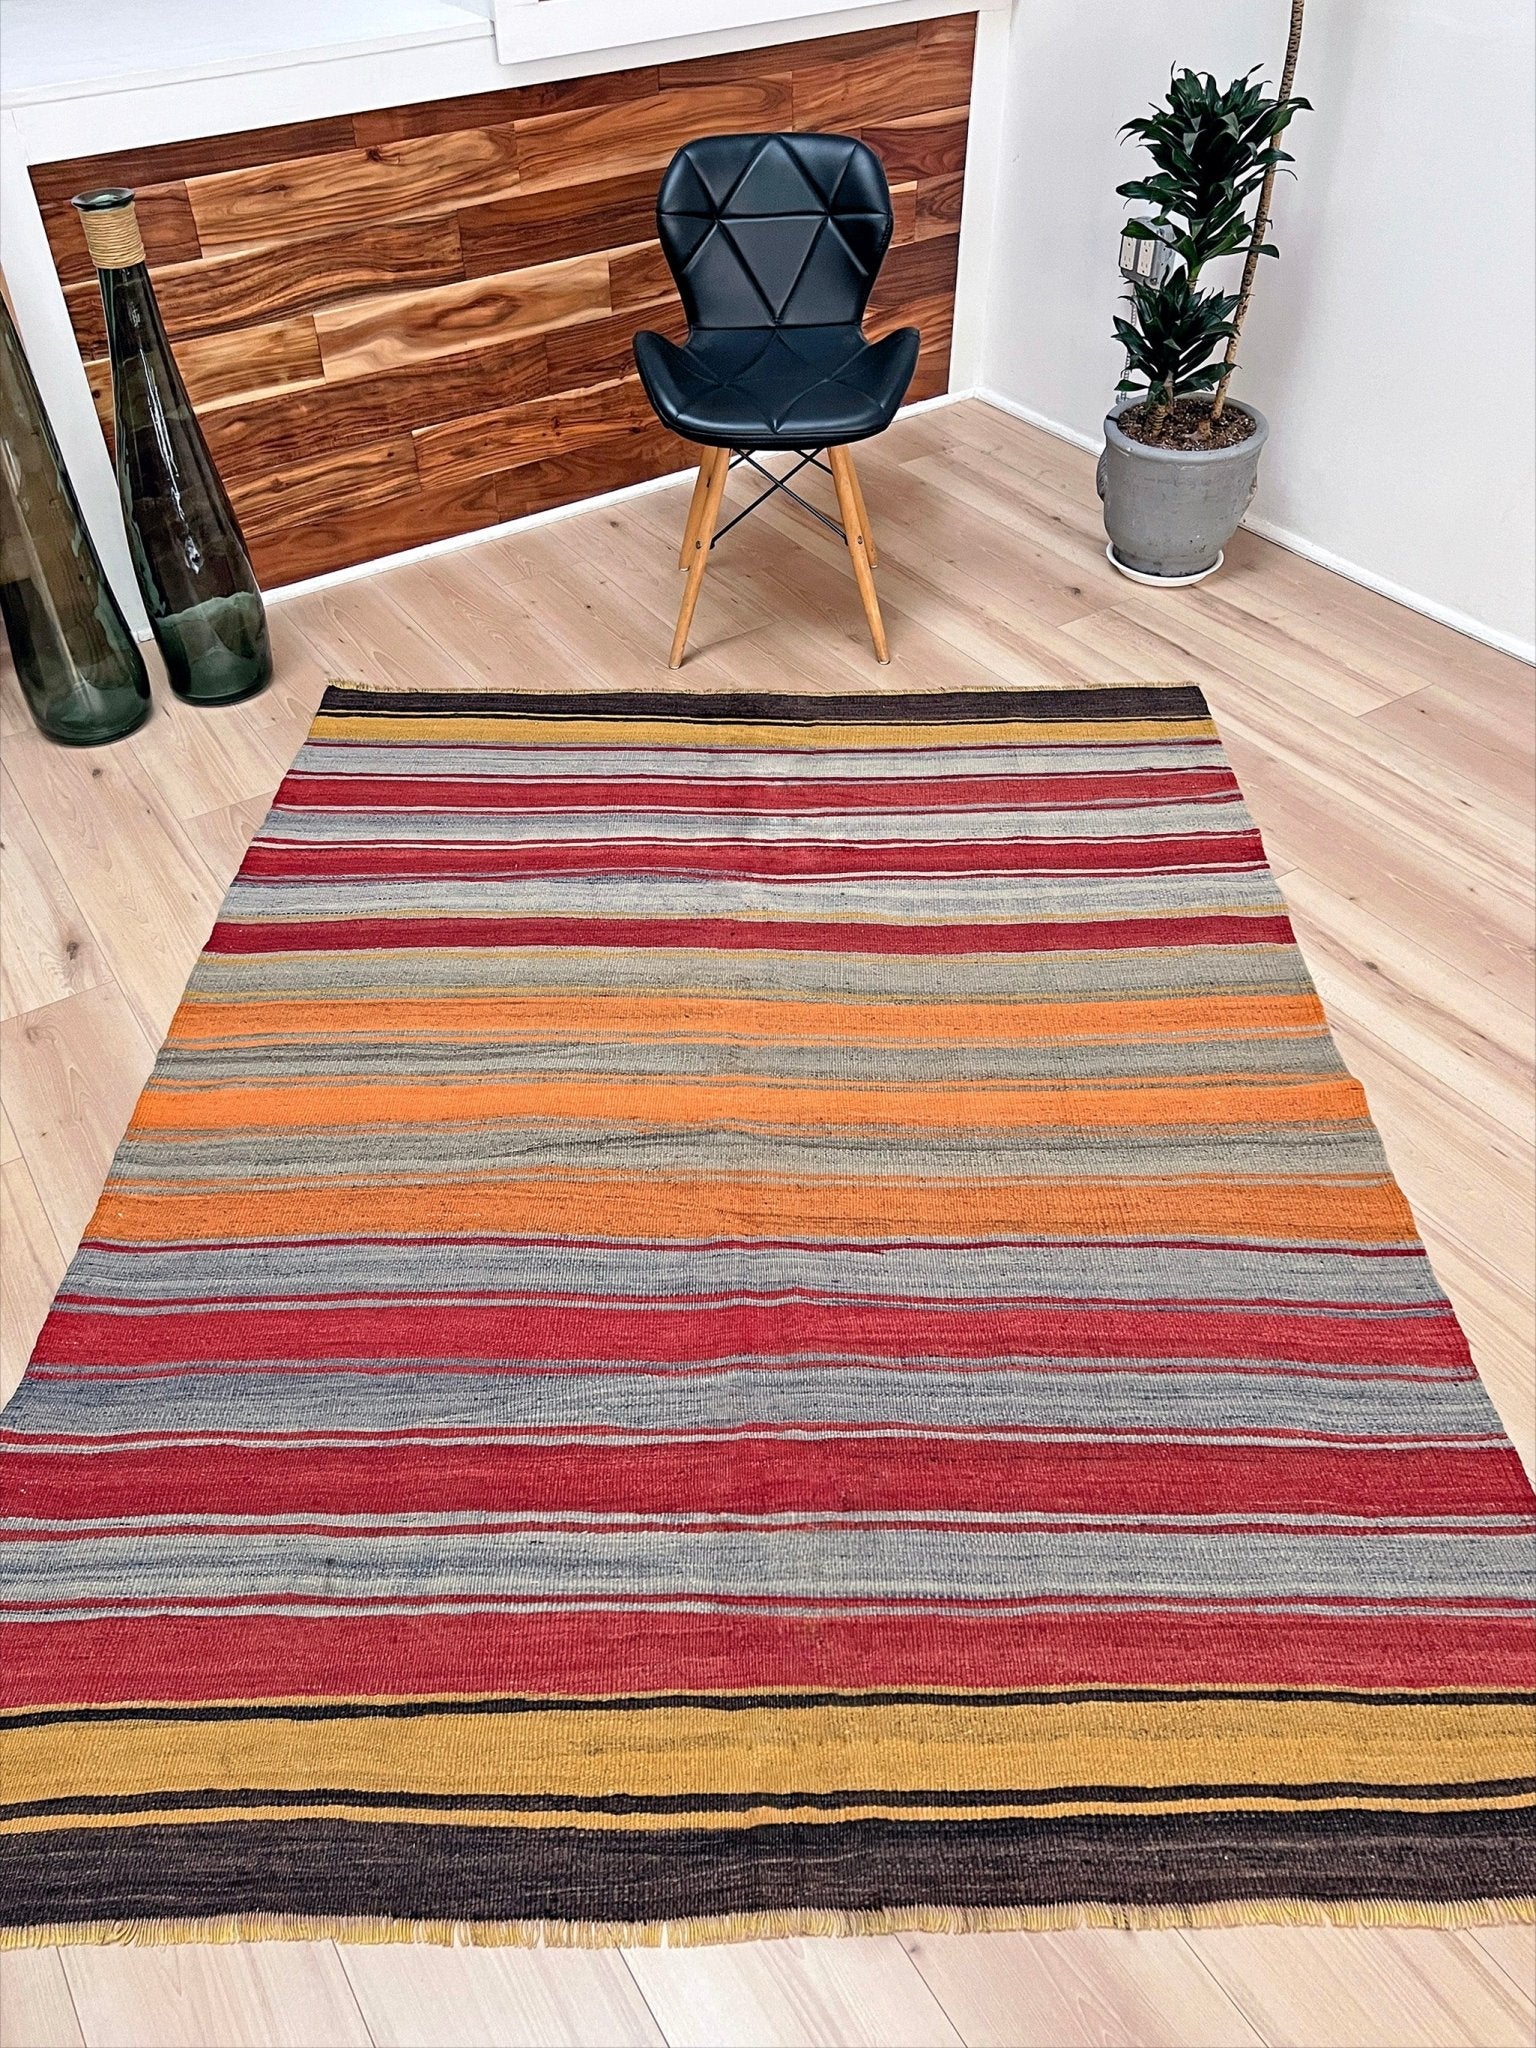 Striped flatweave wool rug. 5x7 turkish kilim rug shop san francisco bay area. Buy rug online free shipping.